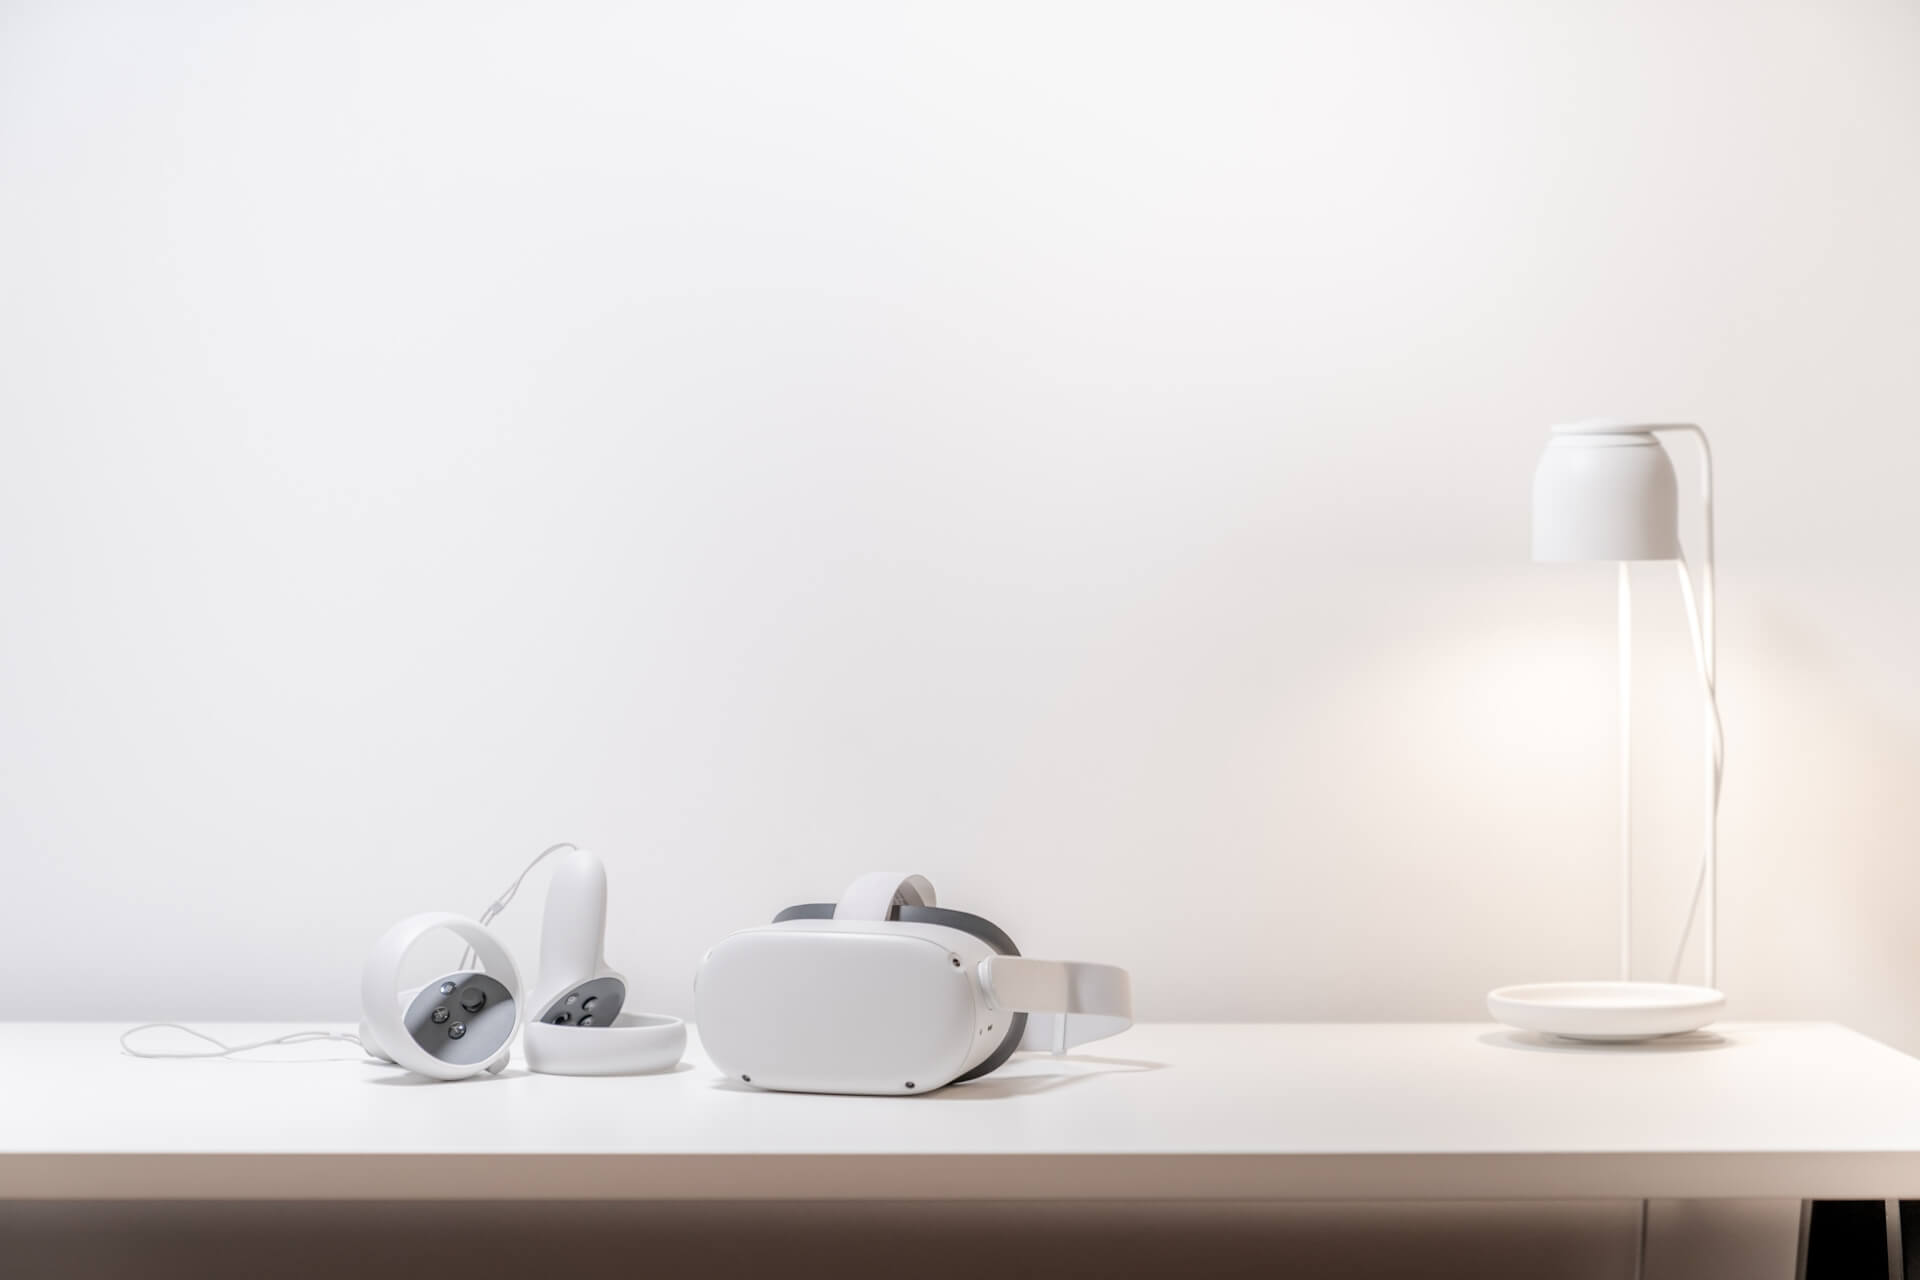 VR Headset for 3D Product Demonstration